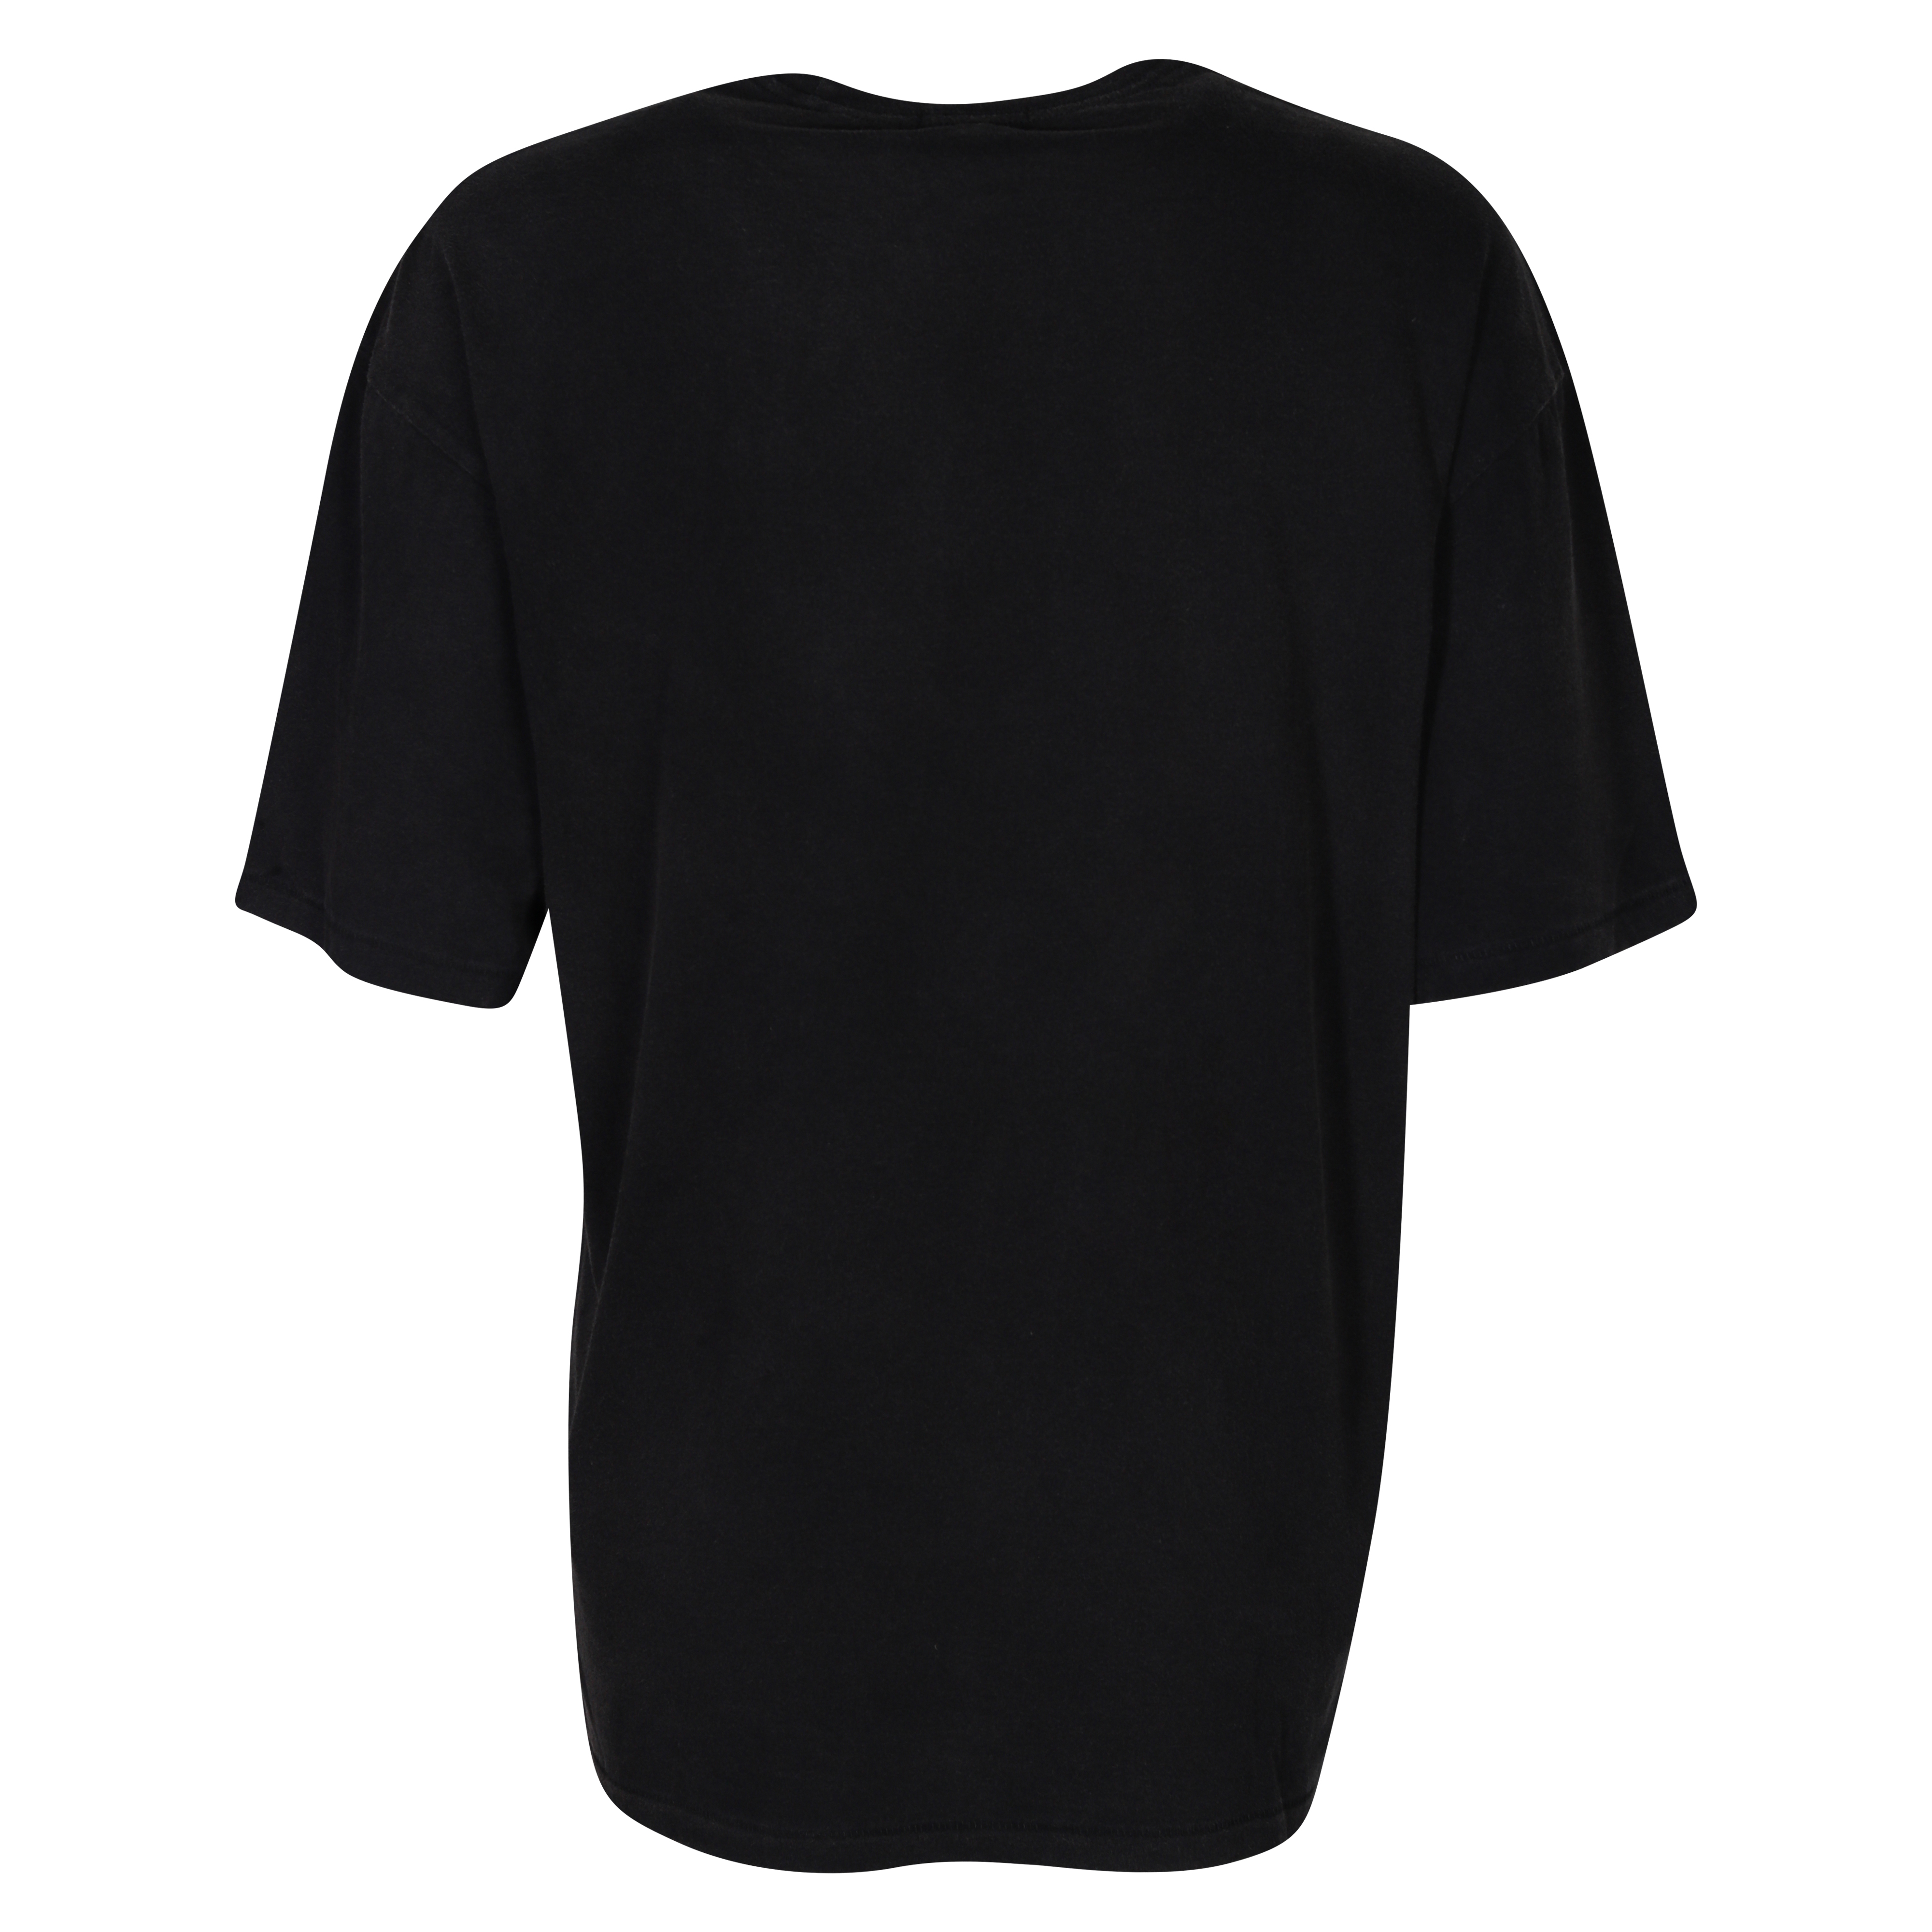 R13 Nirvana Concert T-Shirt Black Printed